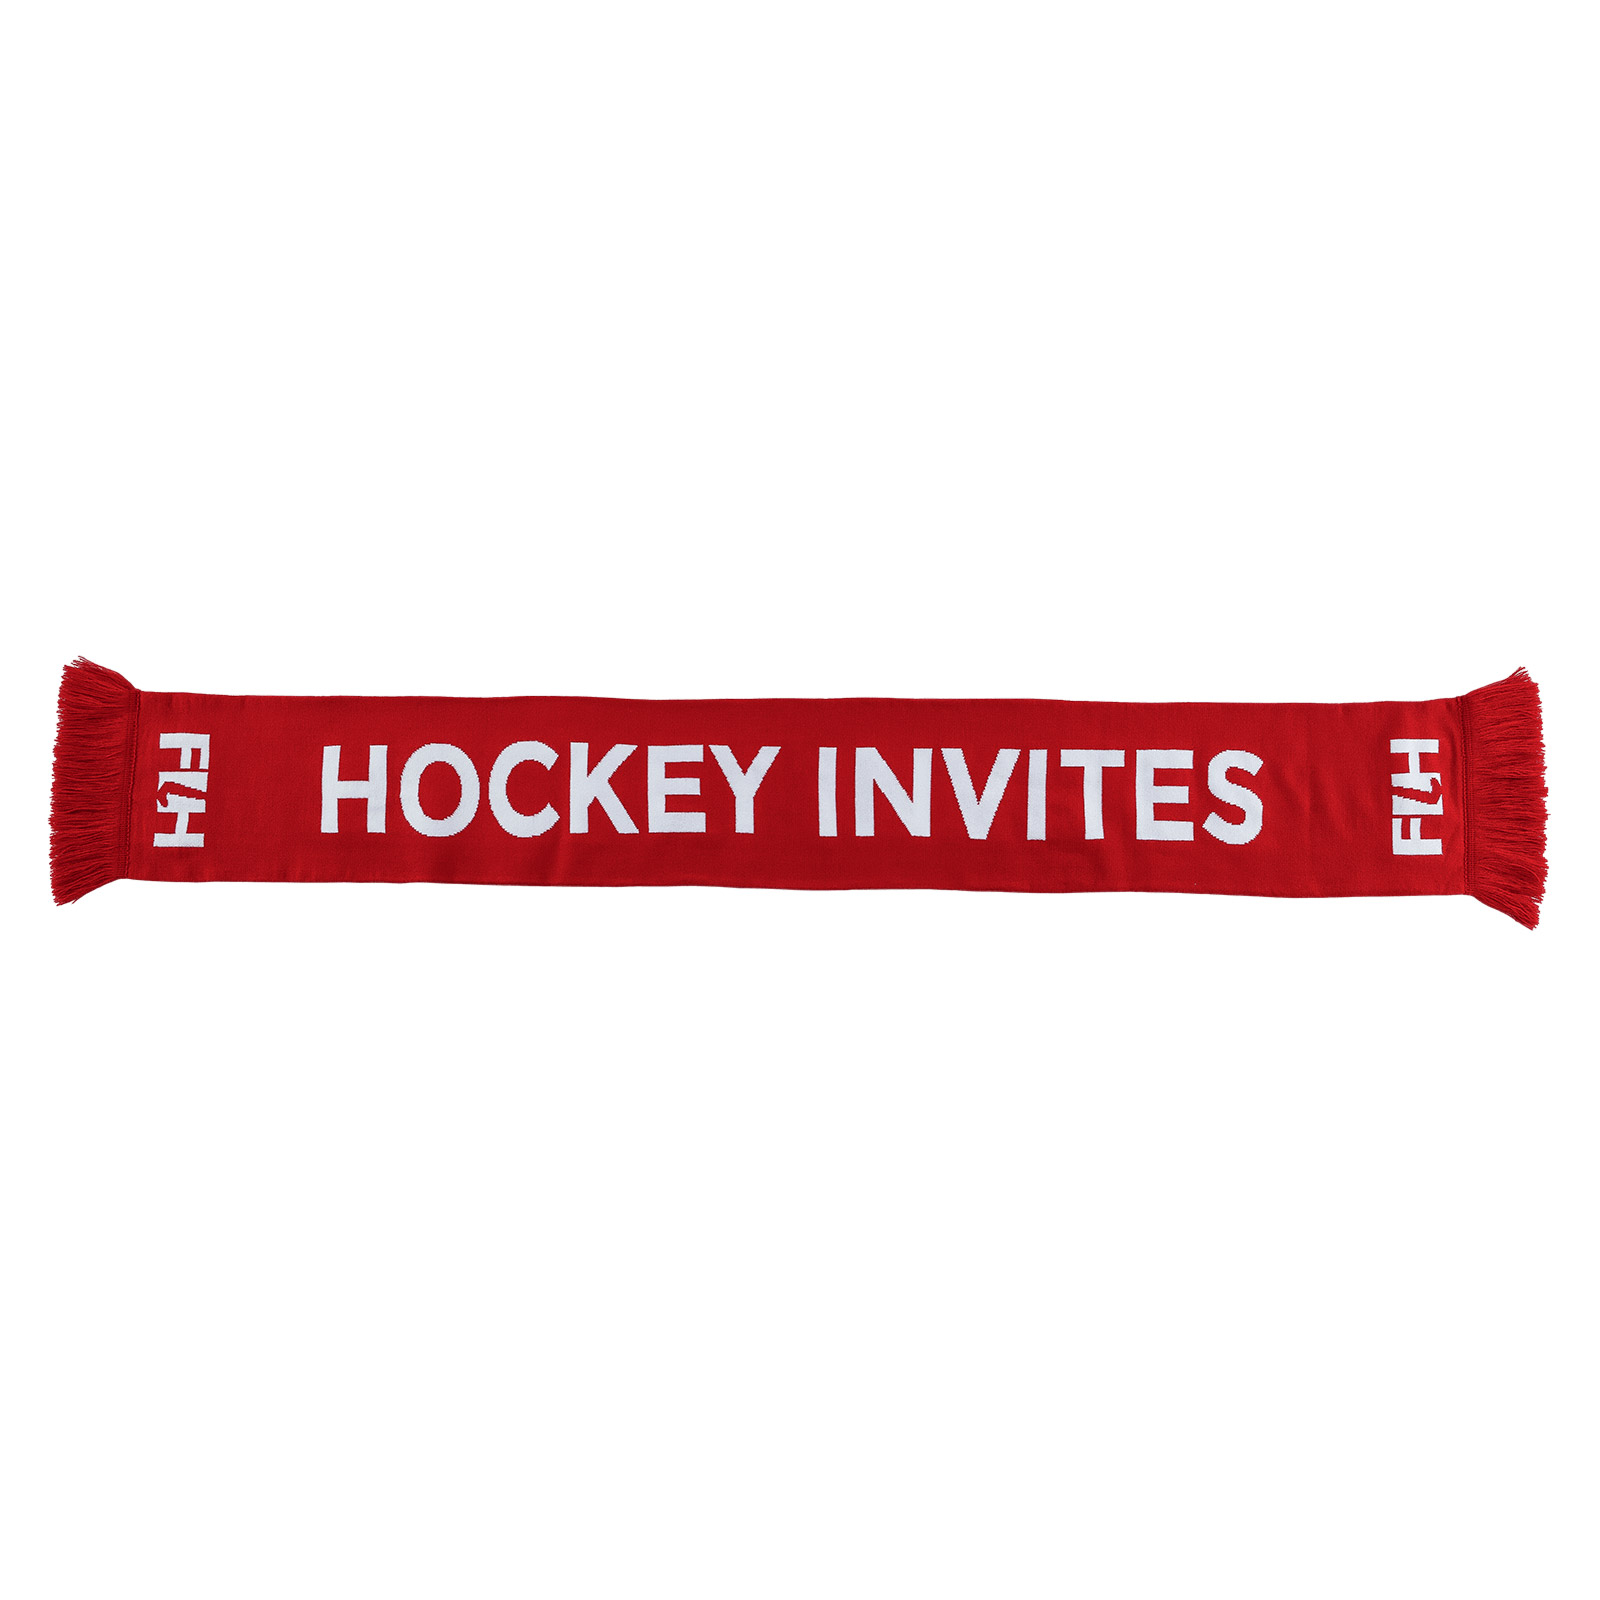 Scarf, reversible, Red - Motive Hockey invites